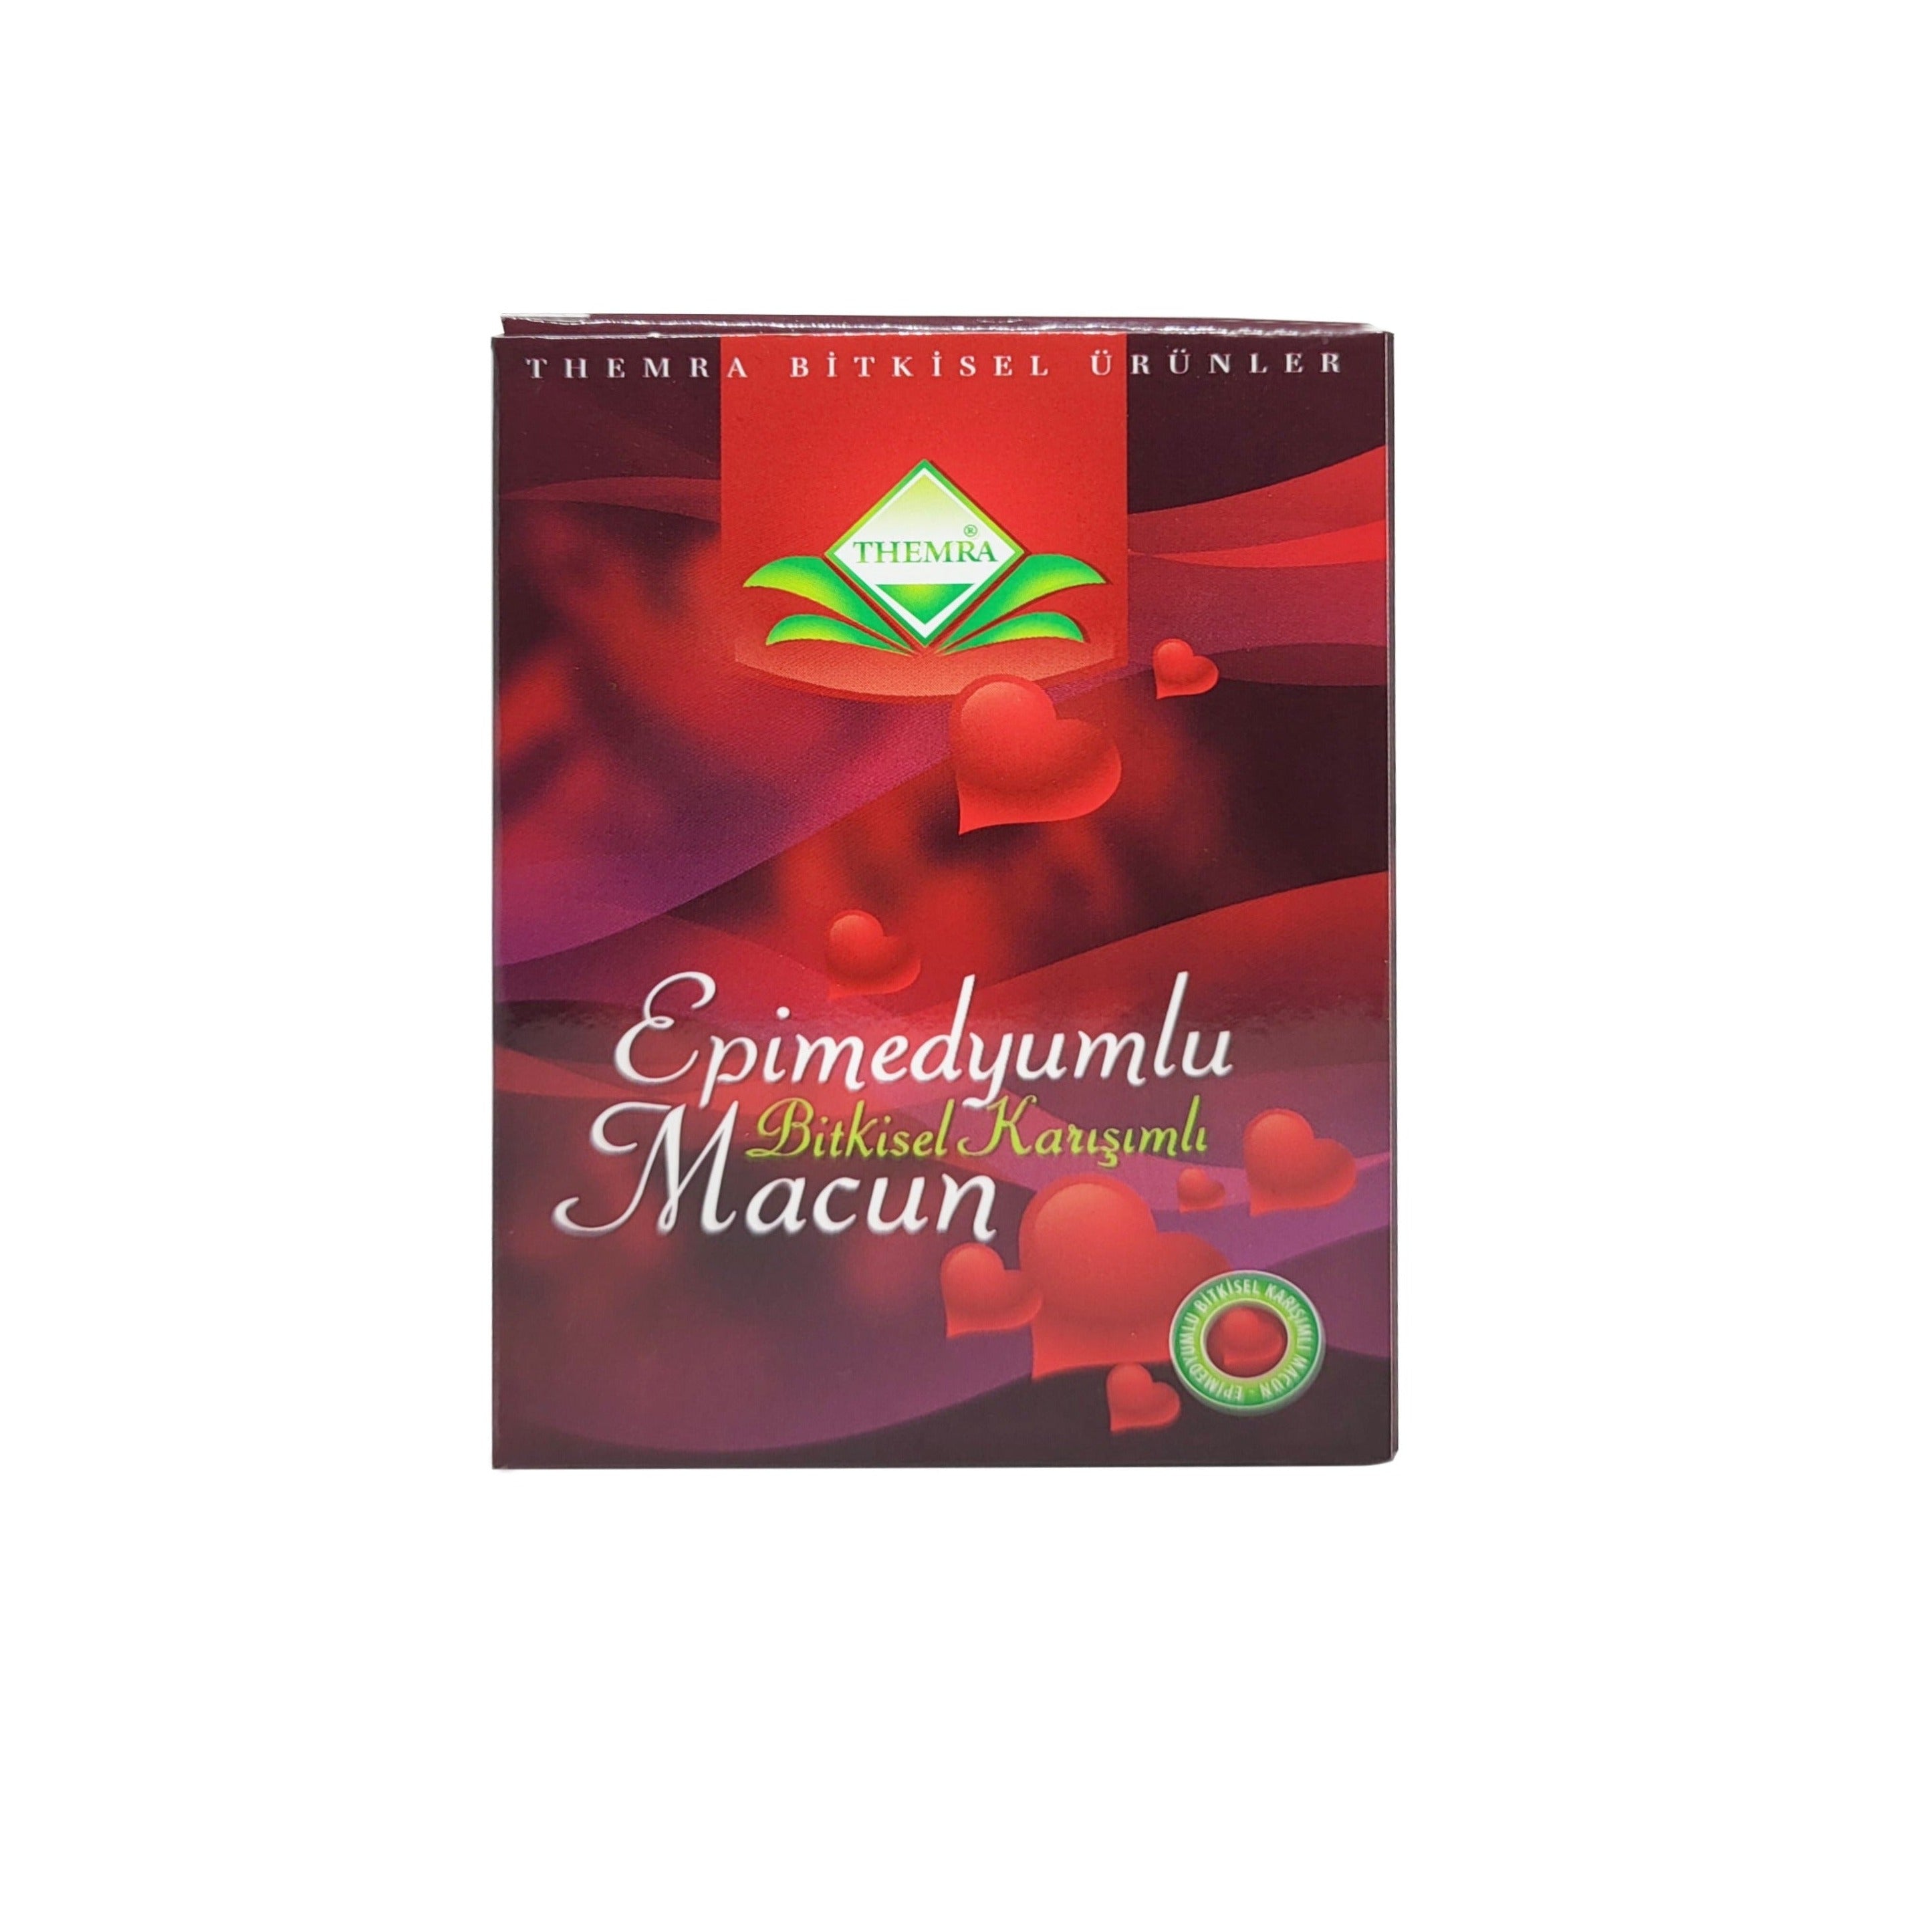 Epimedium Macun Price in Pakistan 03055997199 by EBEYTELEMART, Made in  Taiwan